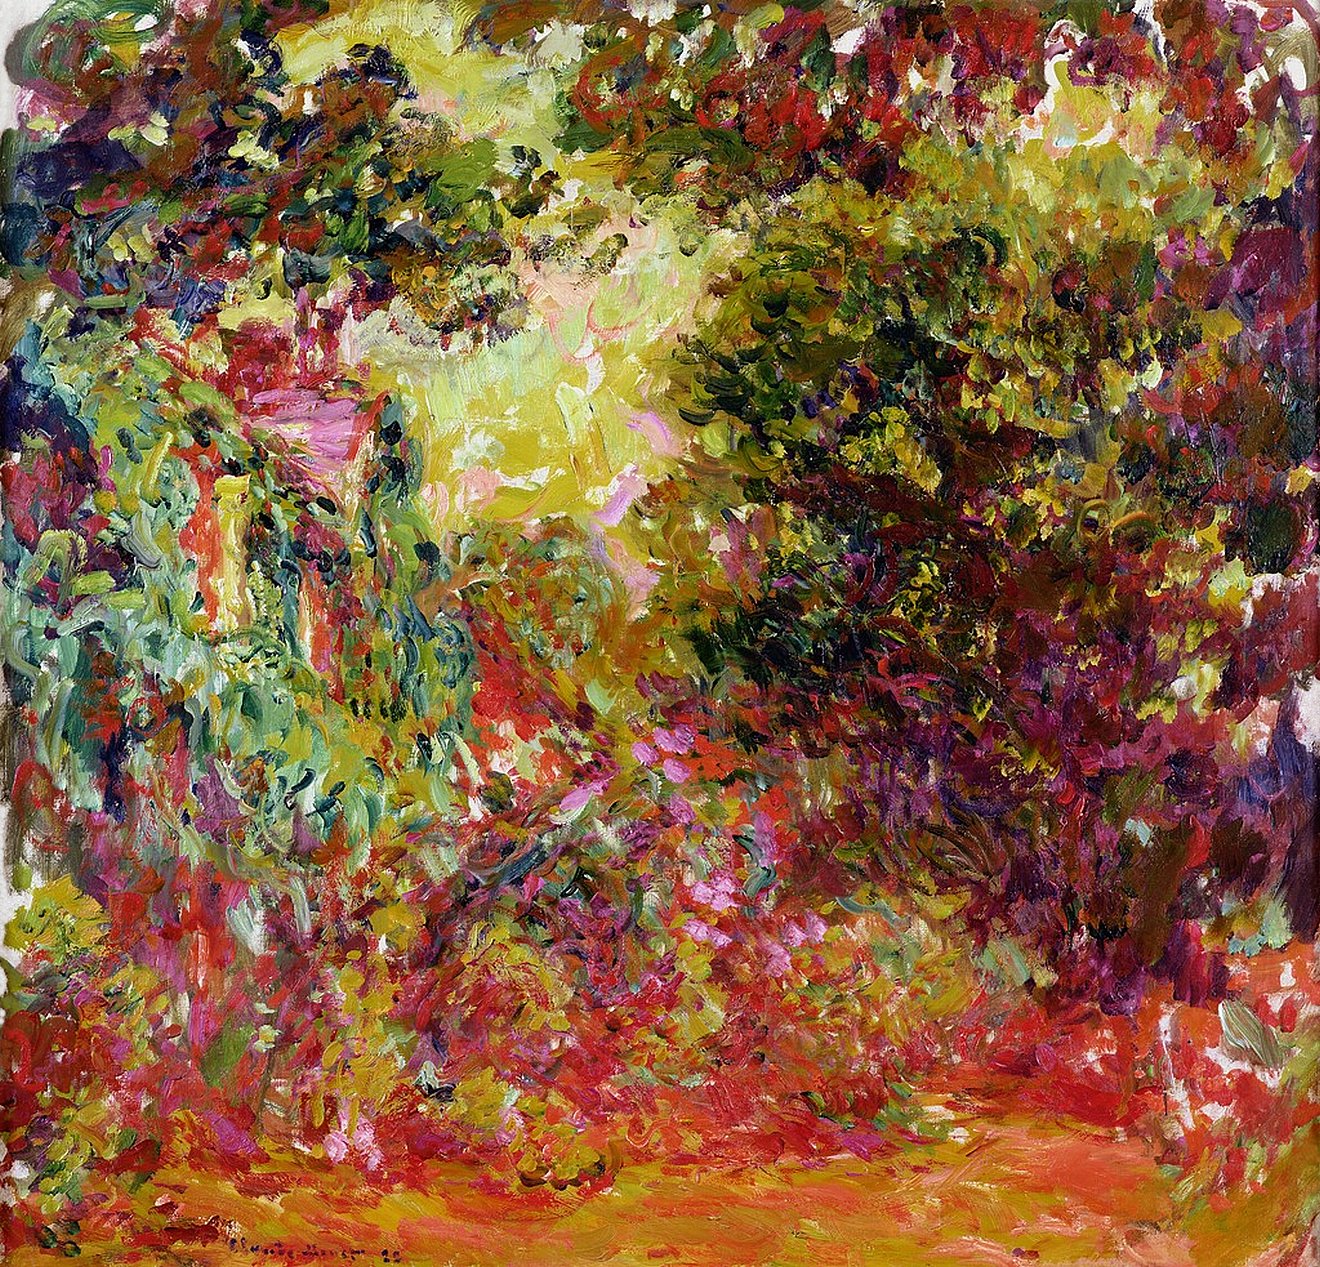 Claude+Monet-1840-1926 (369).jpg